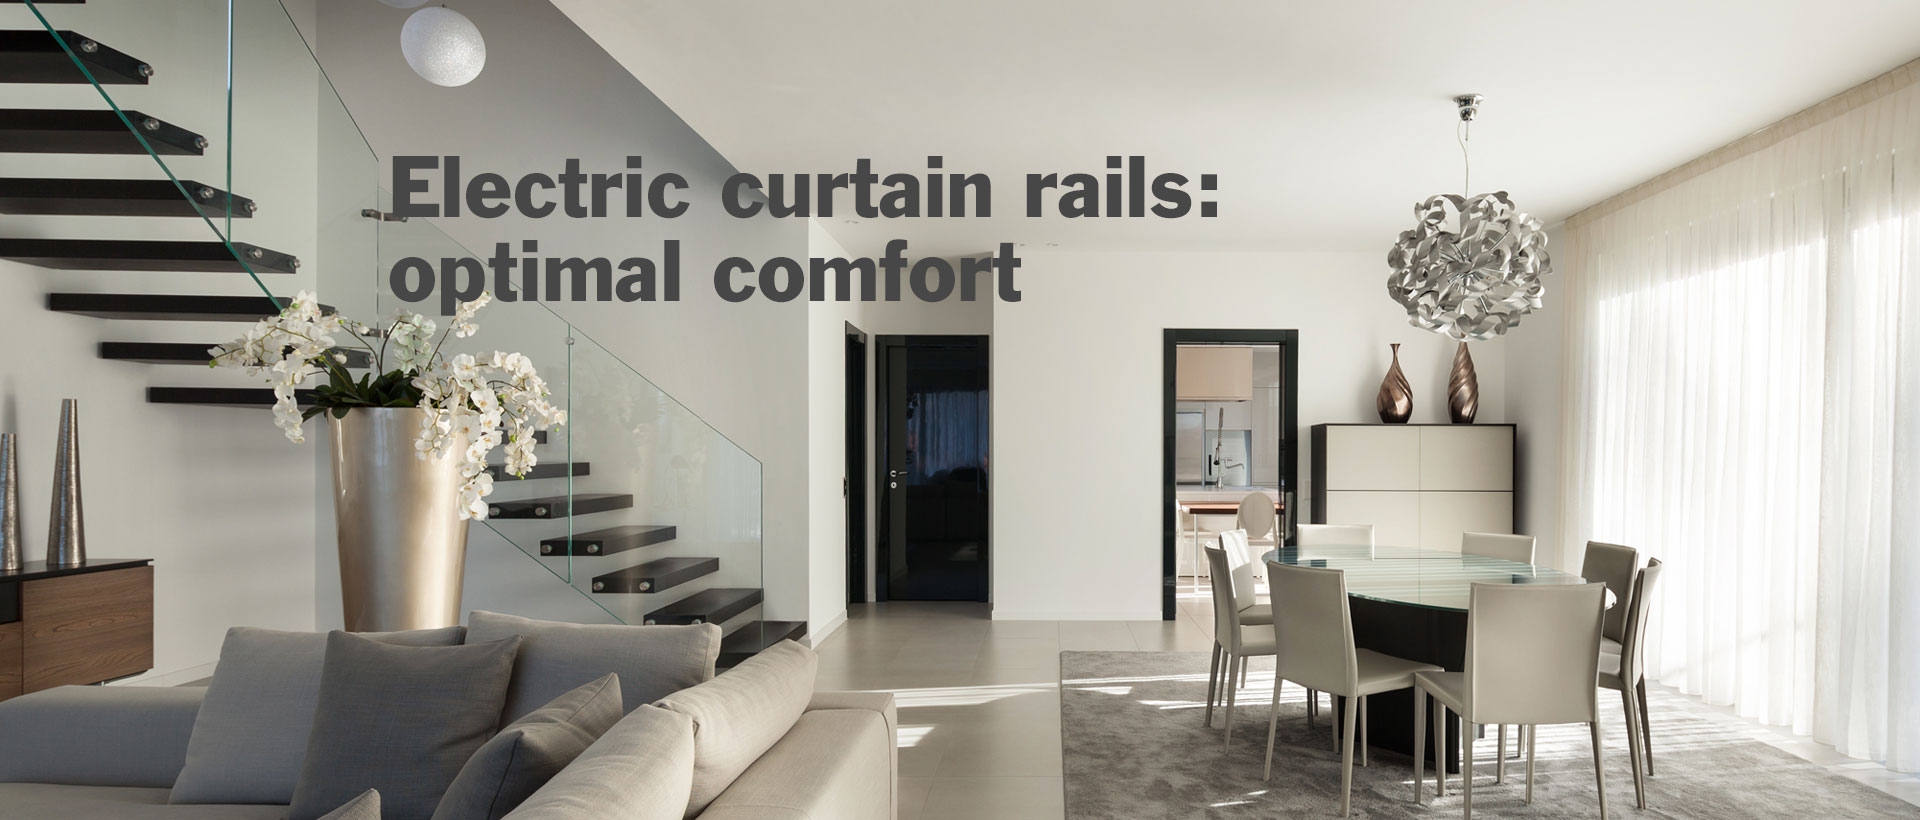 Electric curtain rails - Entrance automation solutions